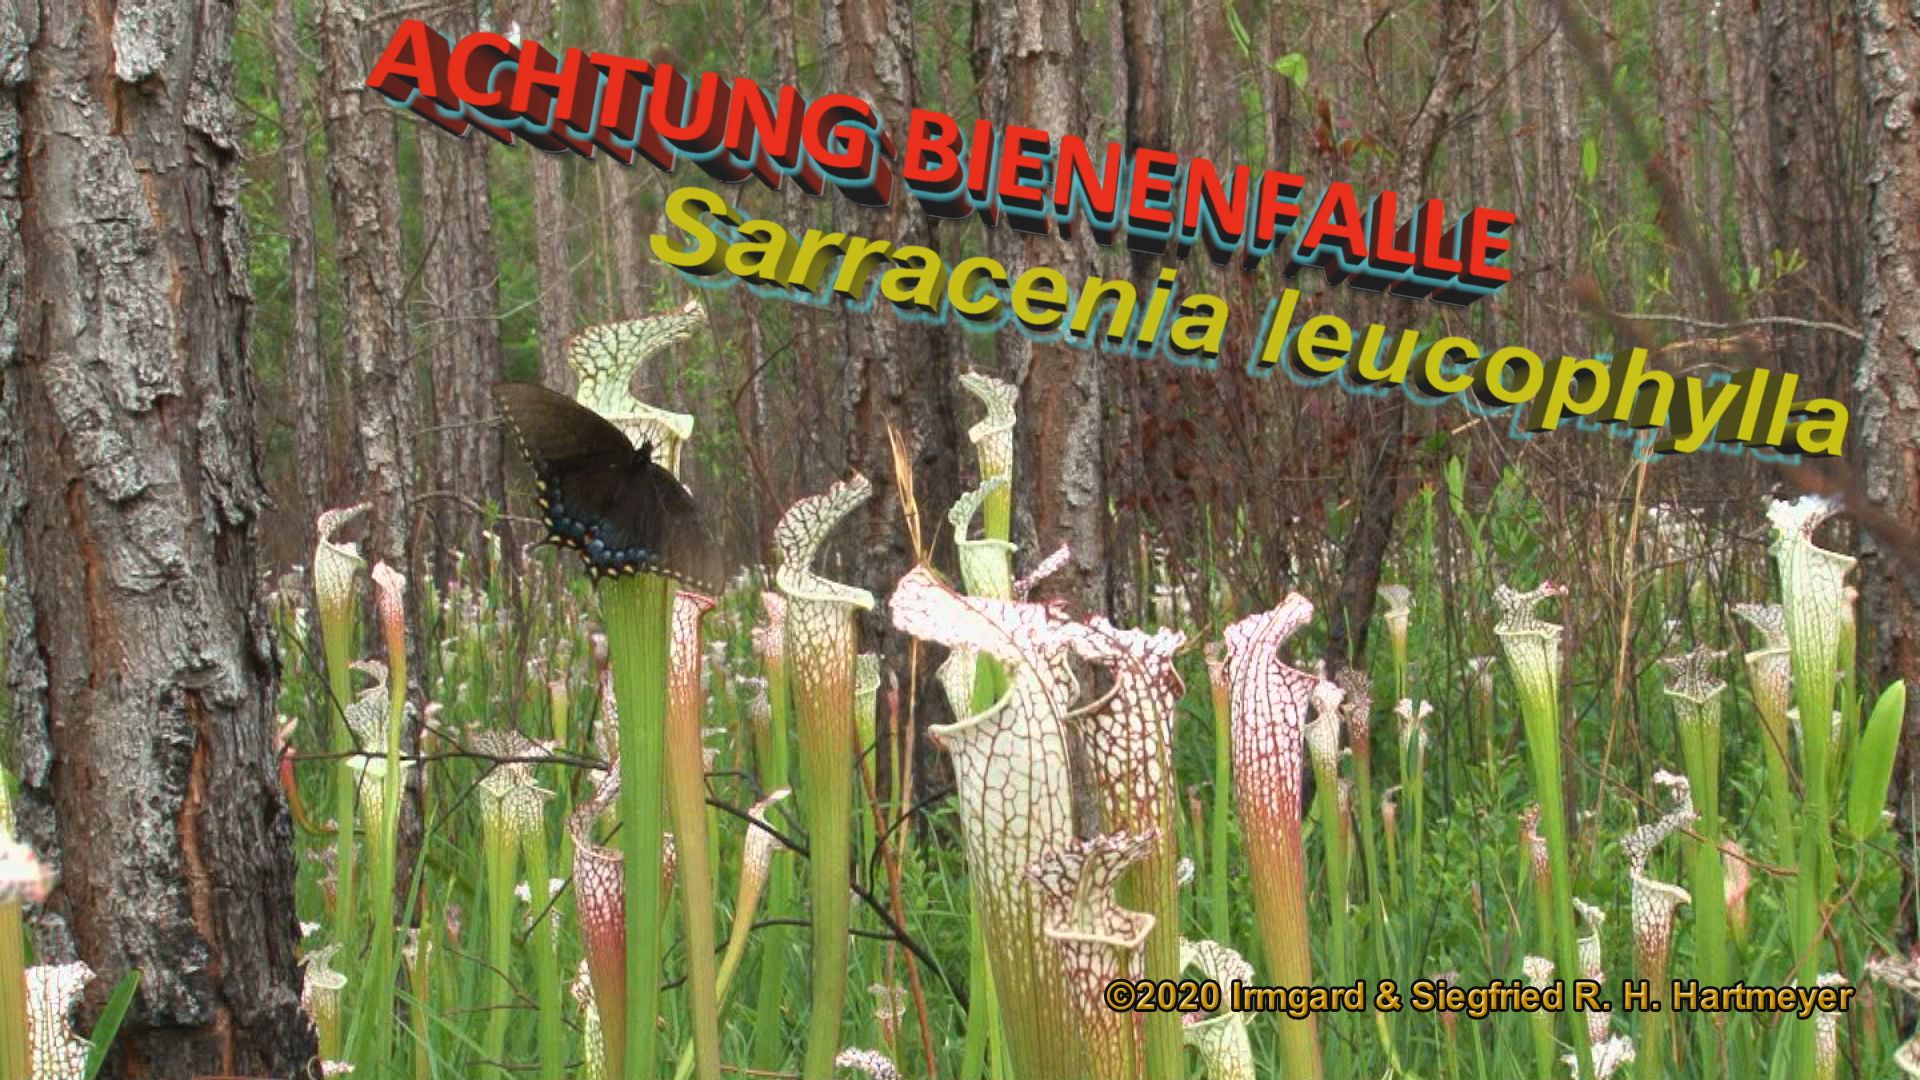 Sarracenia-Bienenfalle_Thumb